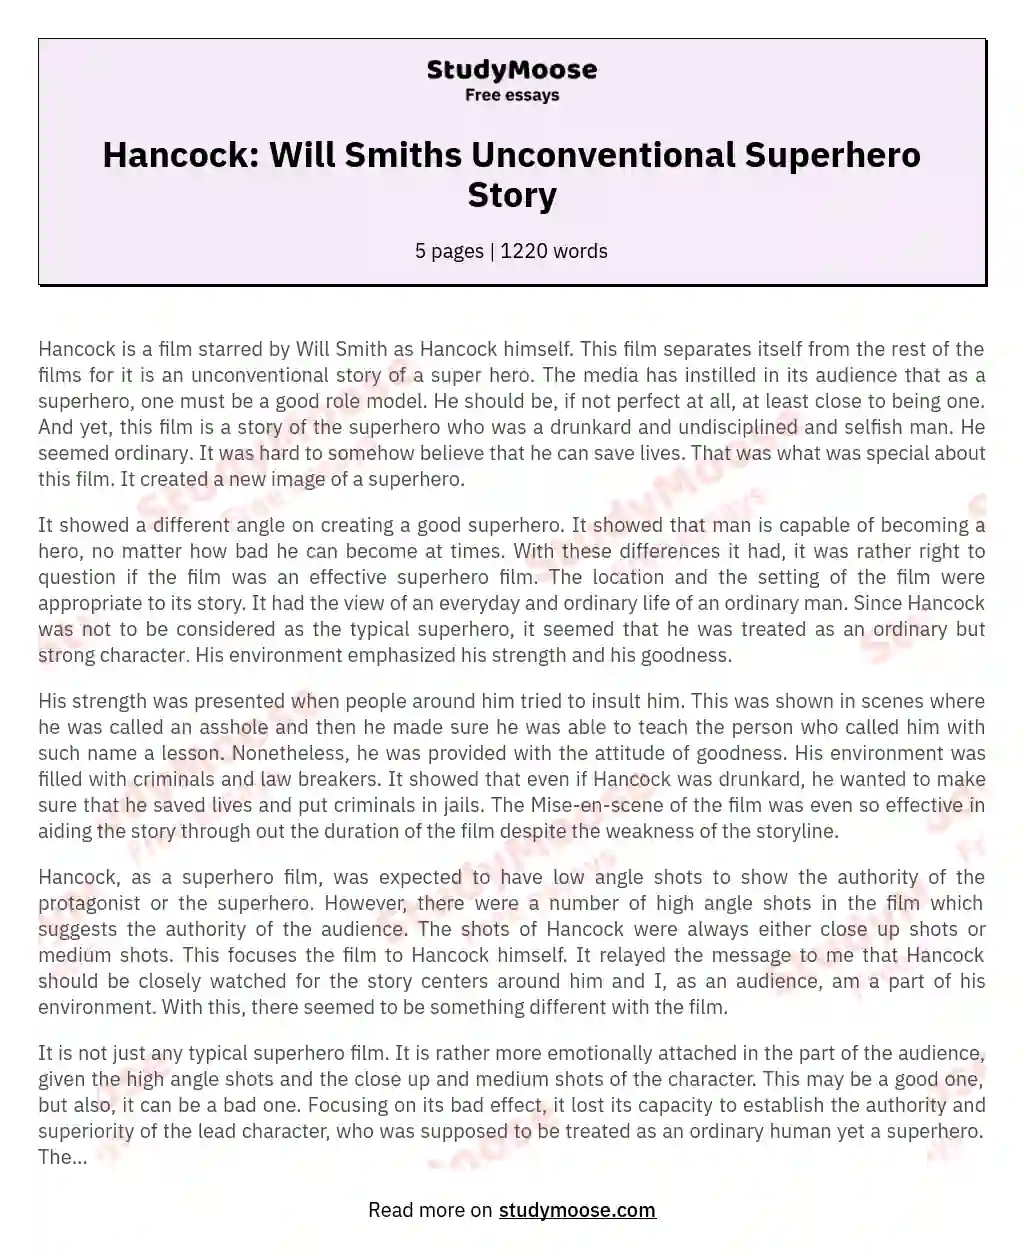 Hancock: Will Smiths Unconventional Superhero Story essay